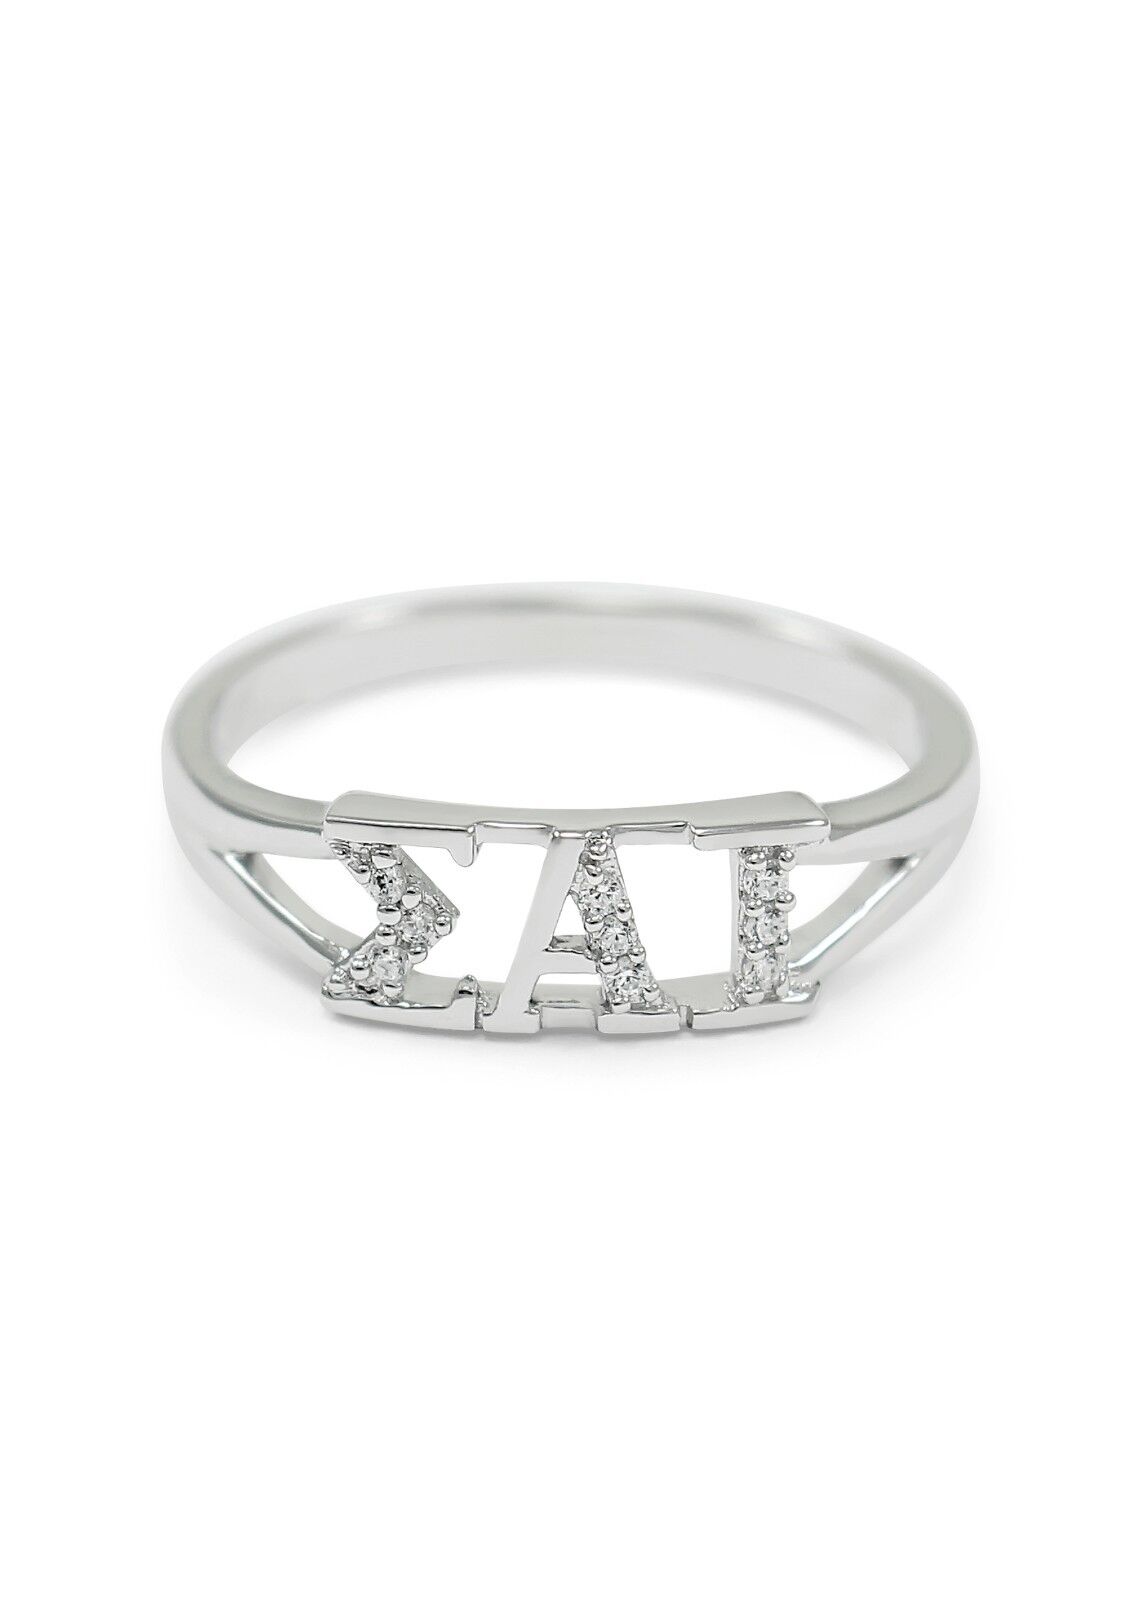 Sigma Alpha Iota sterling silver ring w/simulated diamonds, NEW***